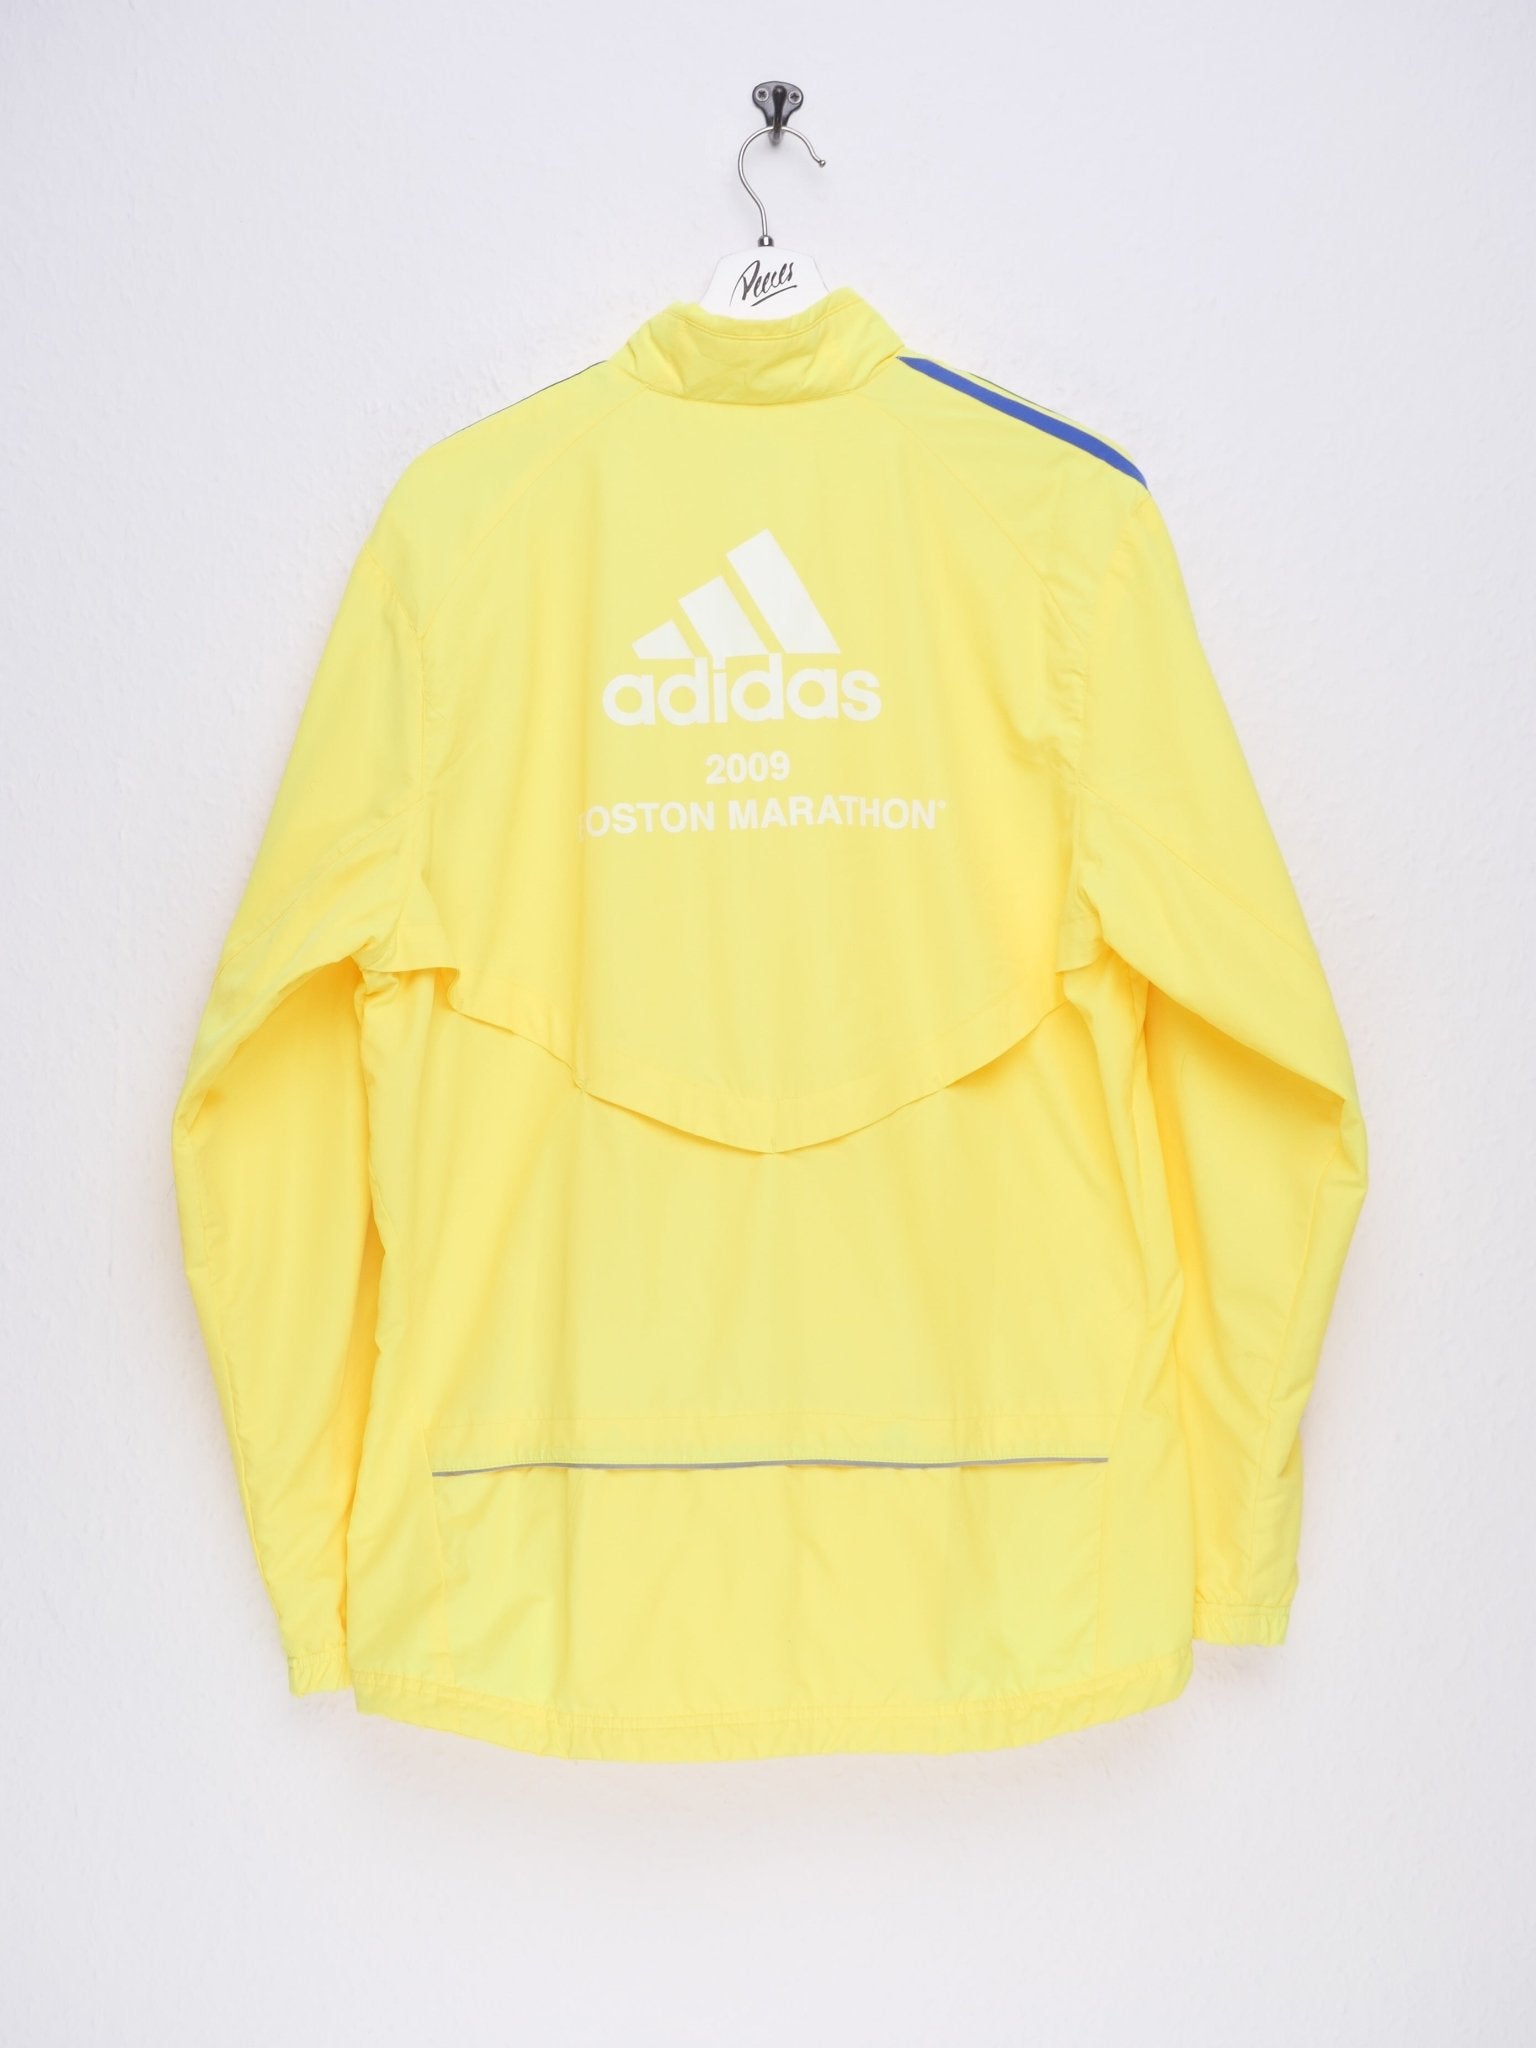 Adidas printed Logo Boston Athletic yellow Track Jacke - Peeces